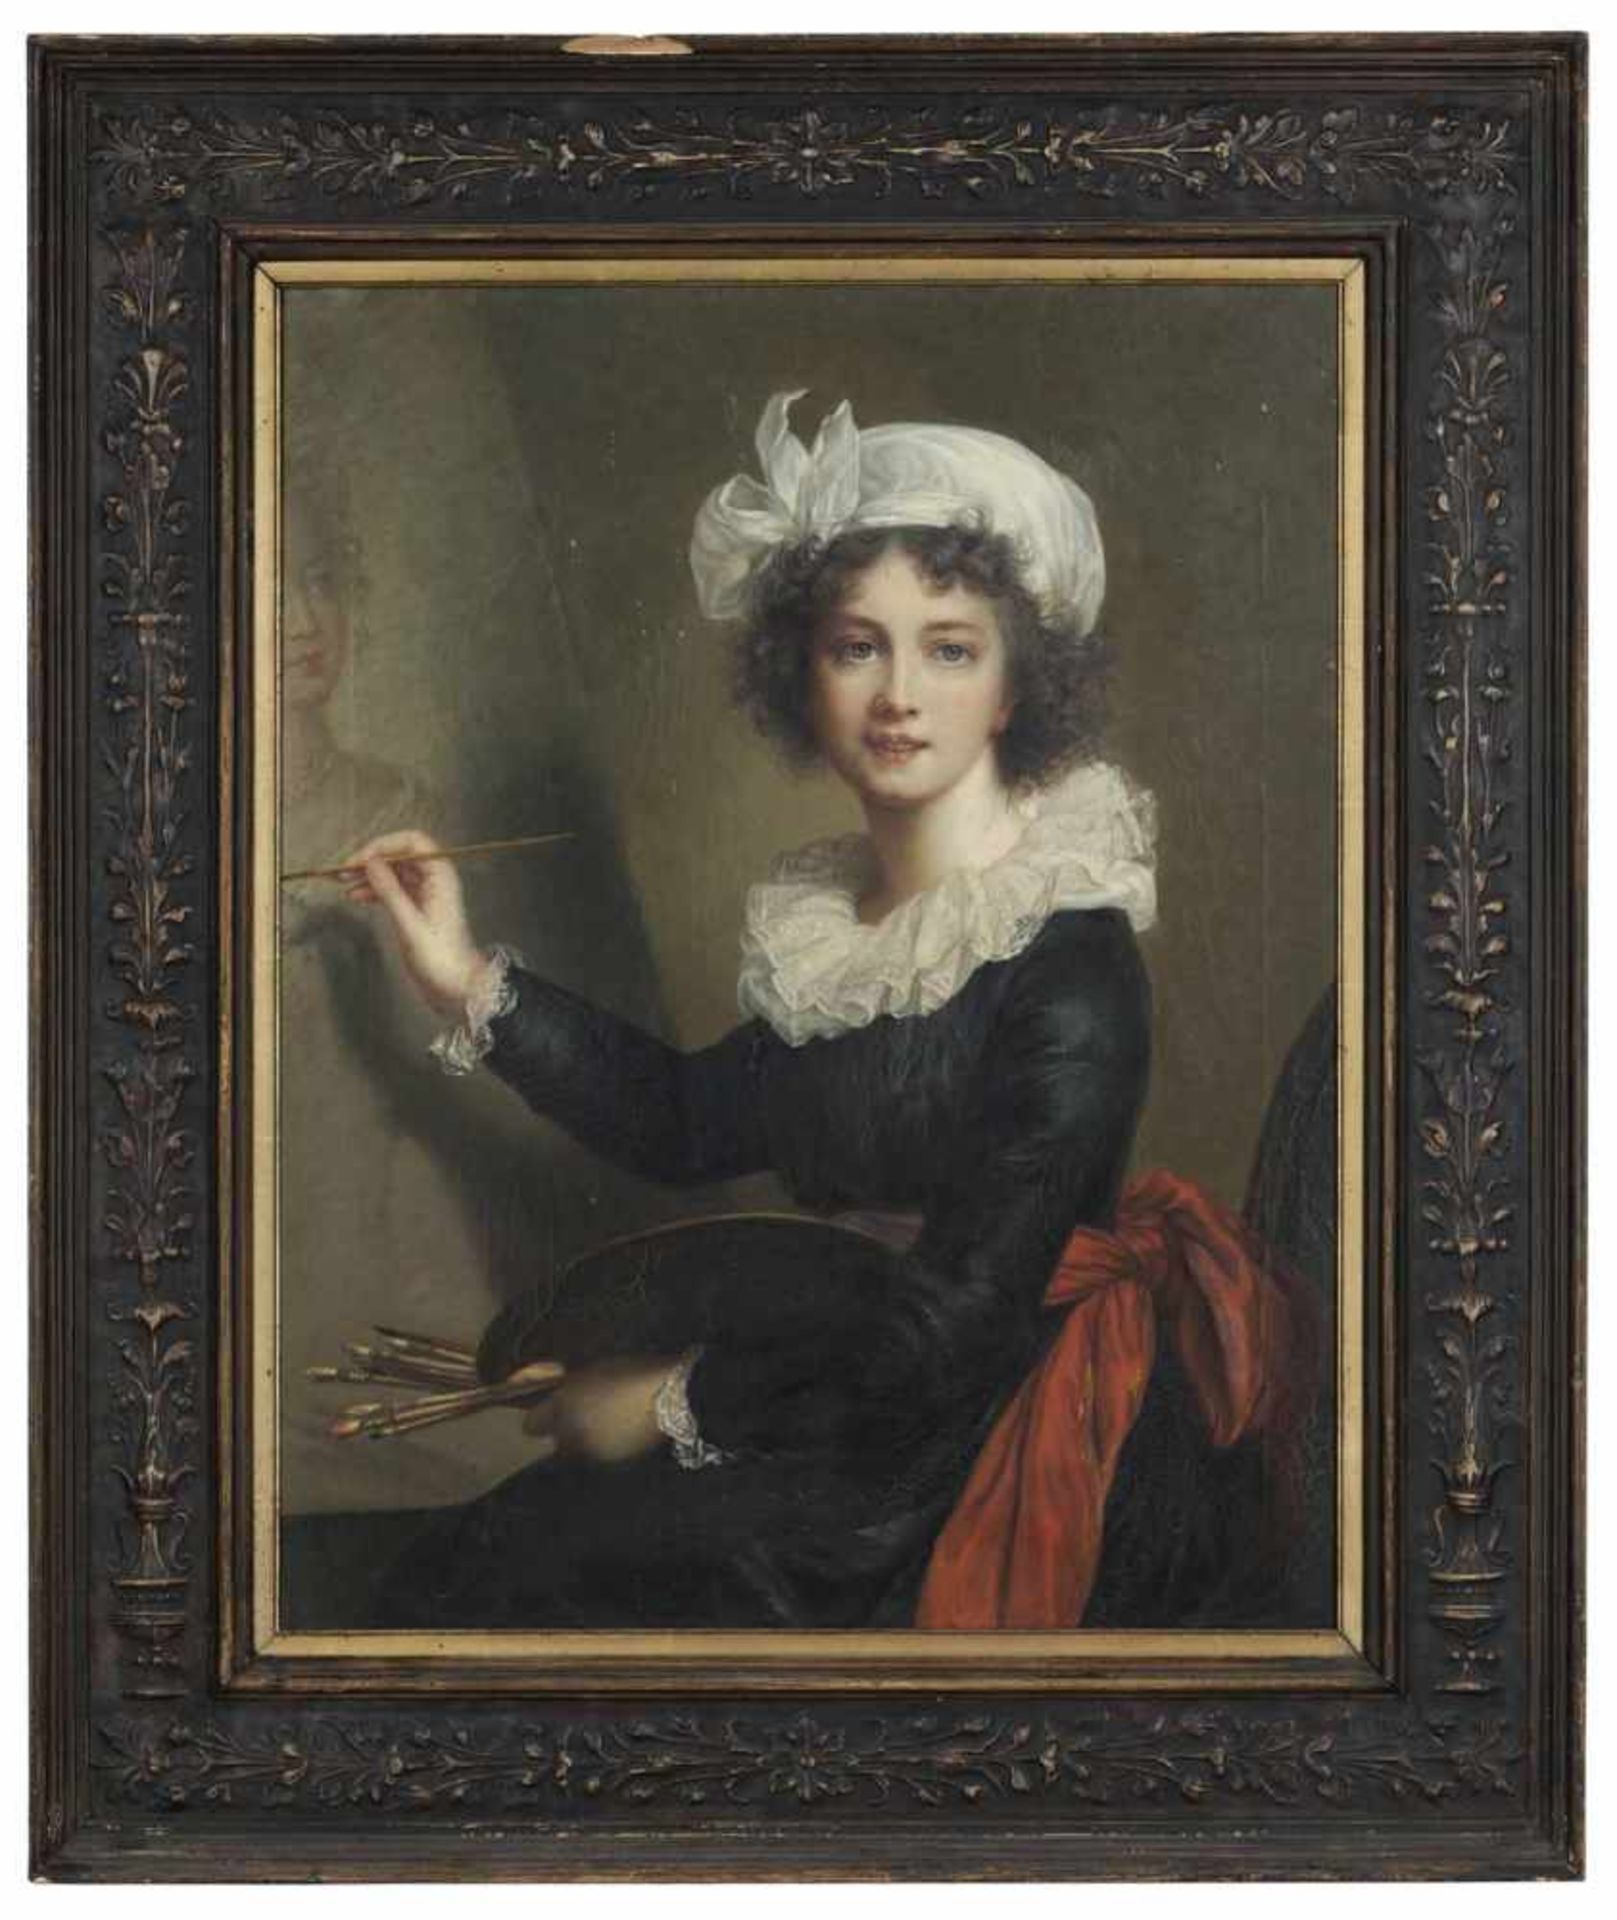 Vigée-Lebrun, Élisabeth (nach)Paris 1755 - 184270 x 57 cmSelbstportrait der Künstlerin an der